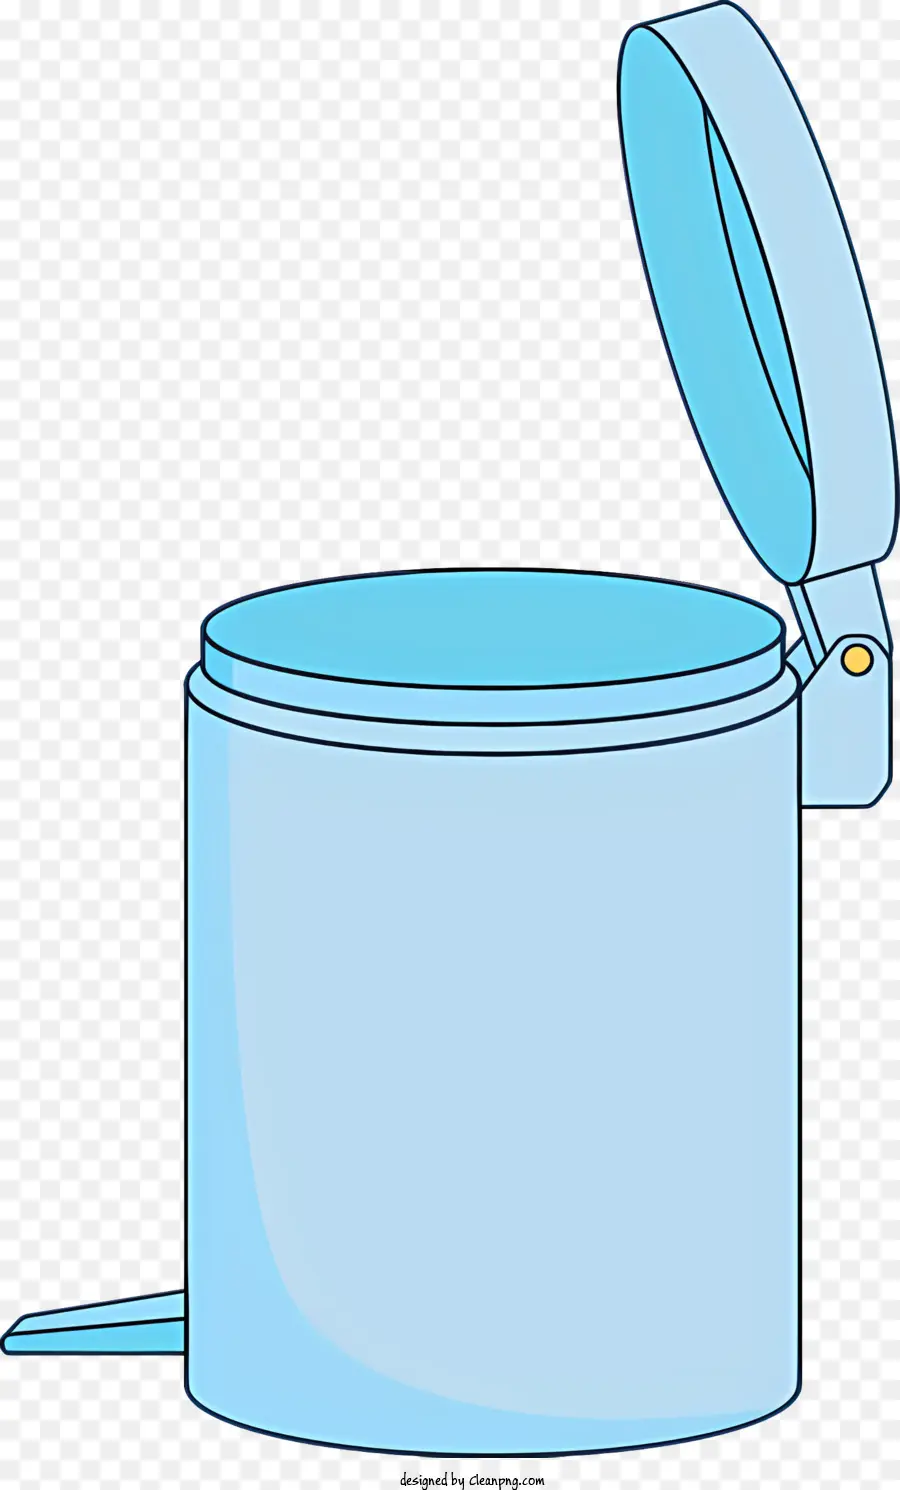 Bubble Gum Cartoon Müll kann blauer Plastikmüll können Deckel Müll können Müll können Inhalte - Cartoonblauer Müll mit offenem Deckel